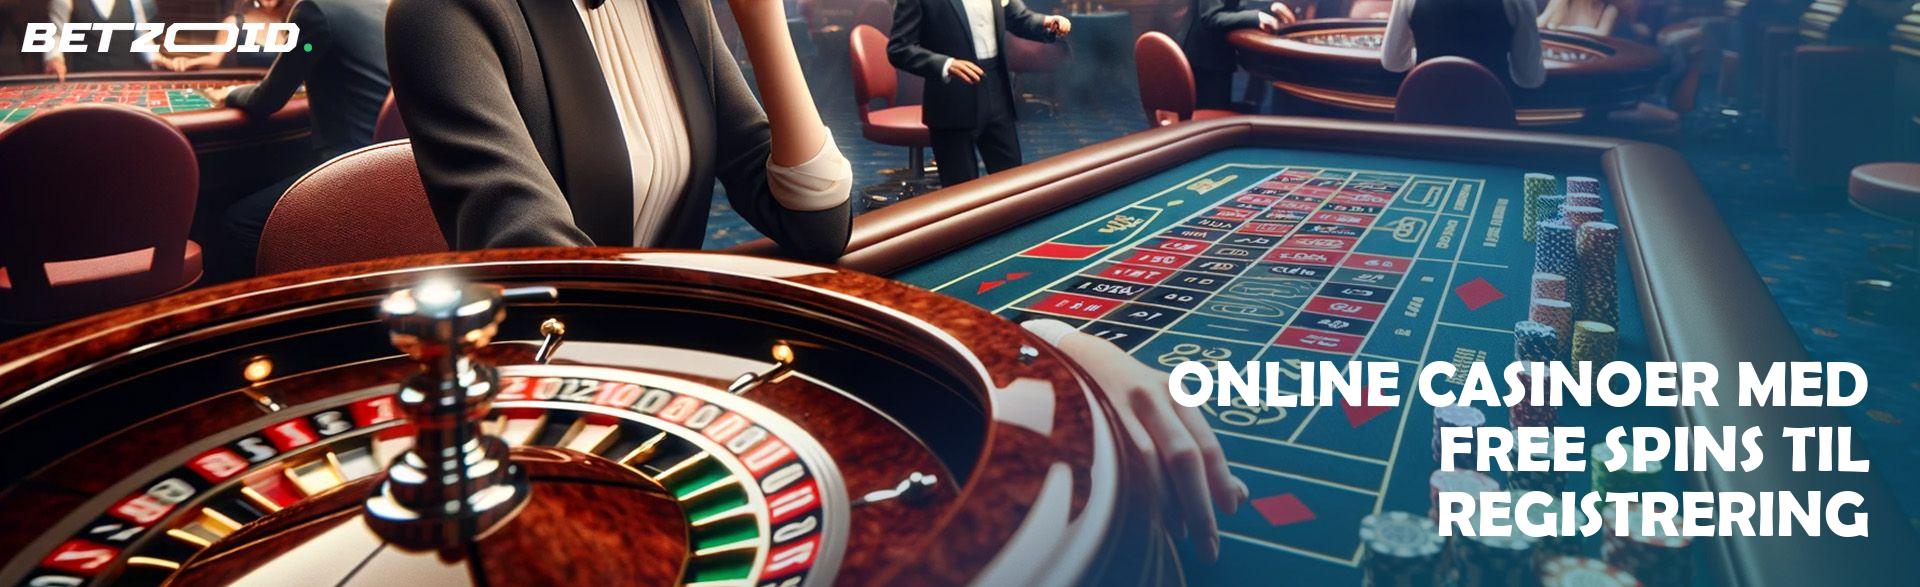 Online Casinoer med Free Spins Til Registrering.